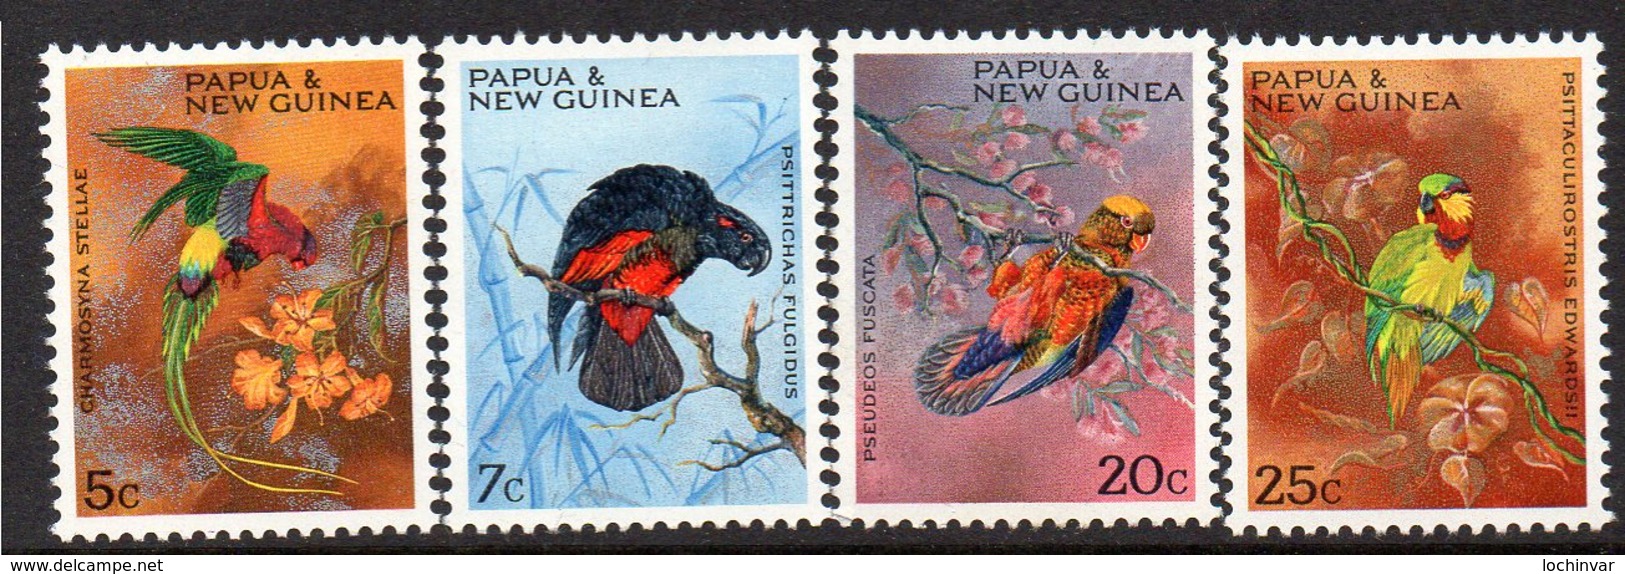 PAPUA NEW GUINEA, 1967 PARROTS 4 MNH - Papua New Guinea